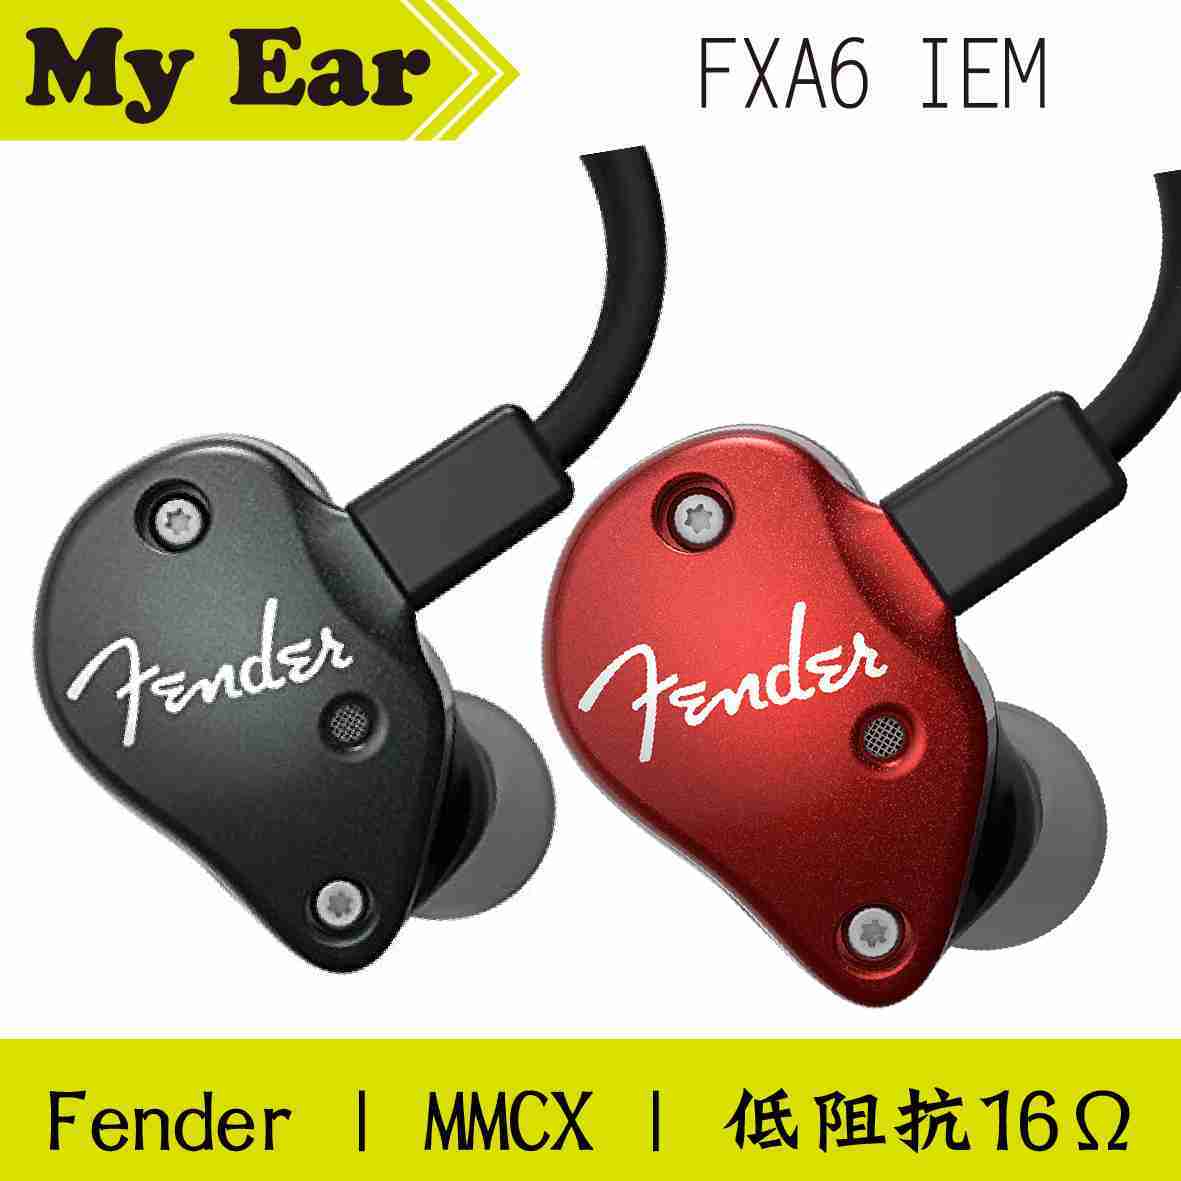 Fender FXA6 IEM 入耳式 監聽級 耳機 兩色可選 | My Ear耳機專門店